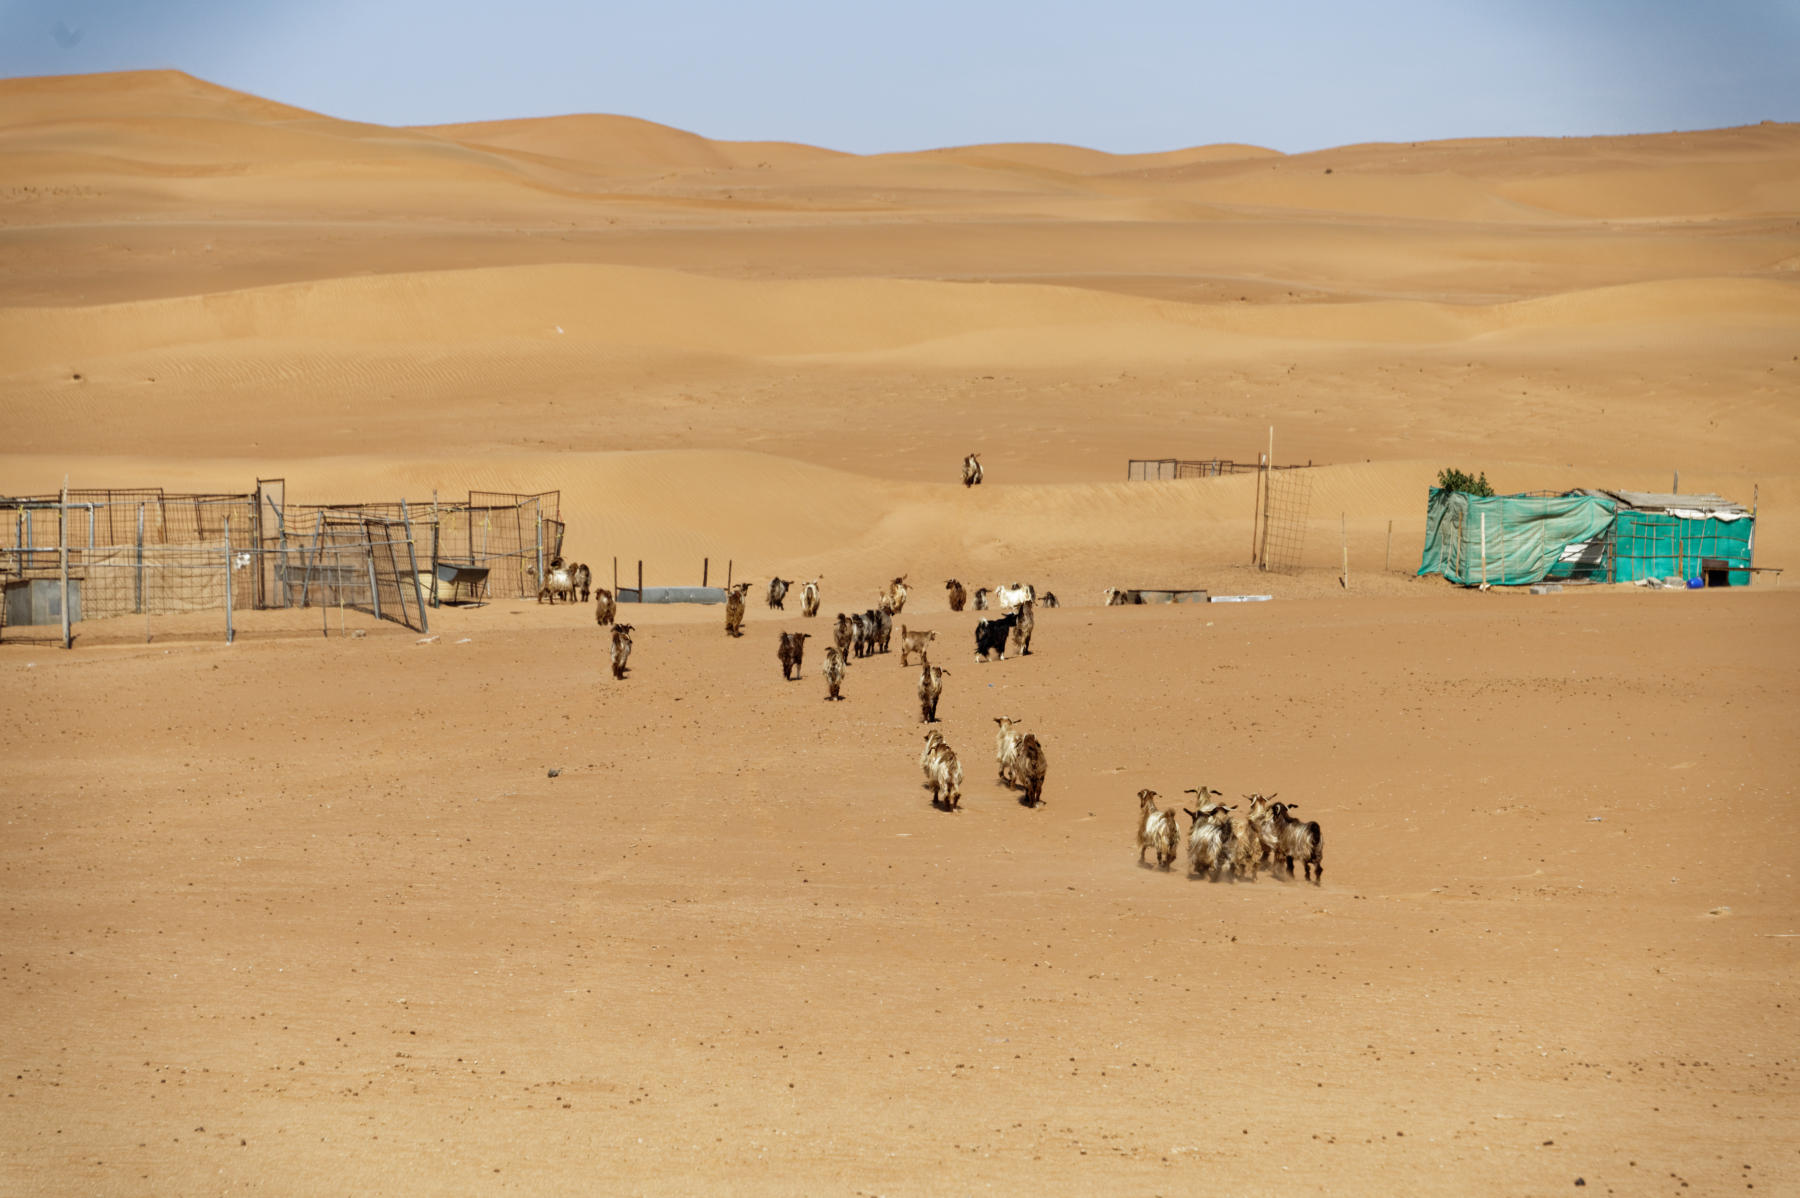 Goats returning to their farm for water, Oman desert